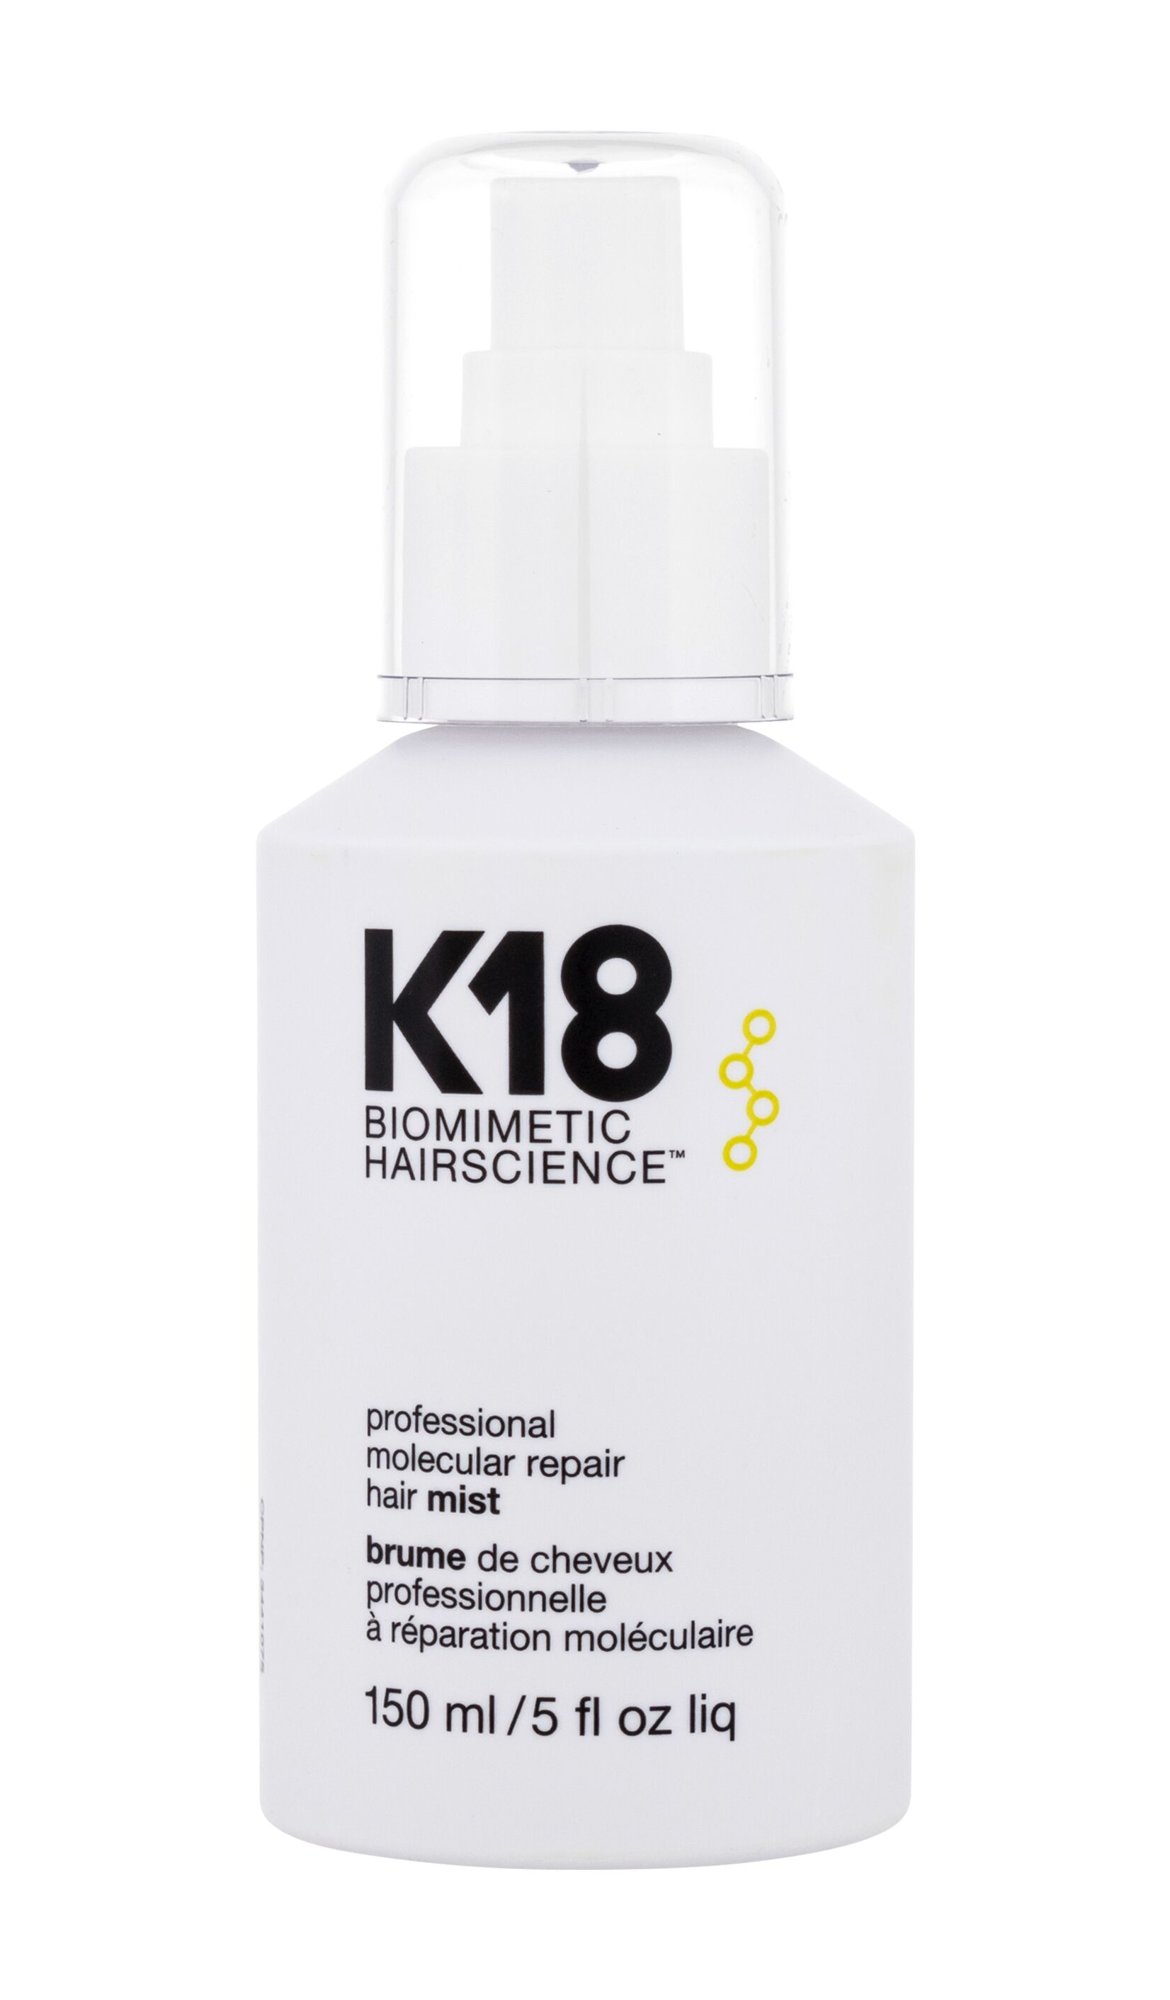 K18 Biomimetic Hairscience Professional Molecular Repair Hair Mist 150ml paliekama priemonė plaukams